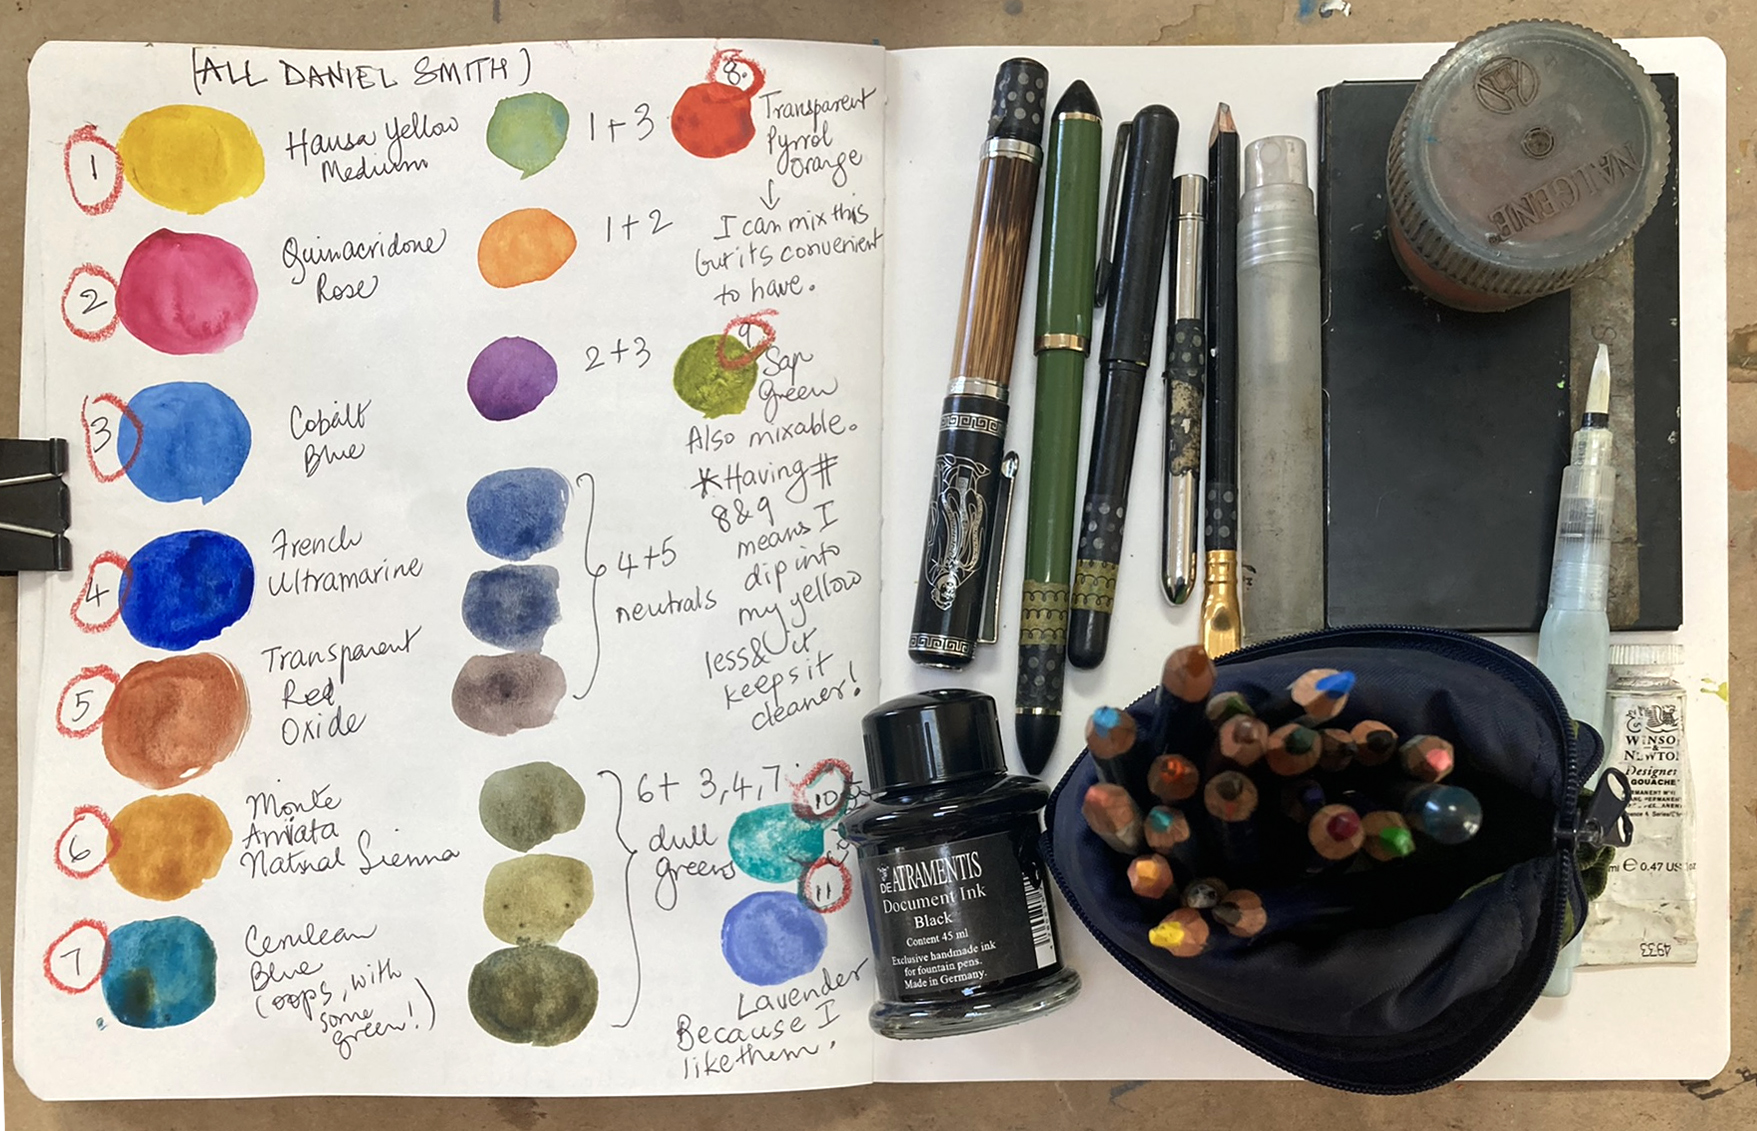 Watercolor Supplies Guide: Pens, Paper, Paint Brushes, Waterproof Ink